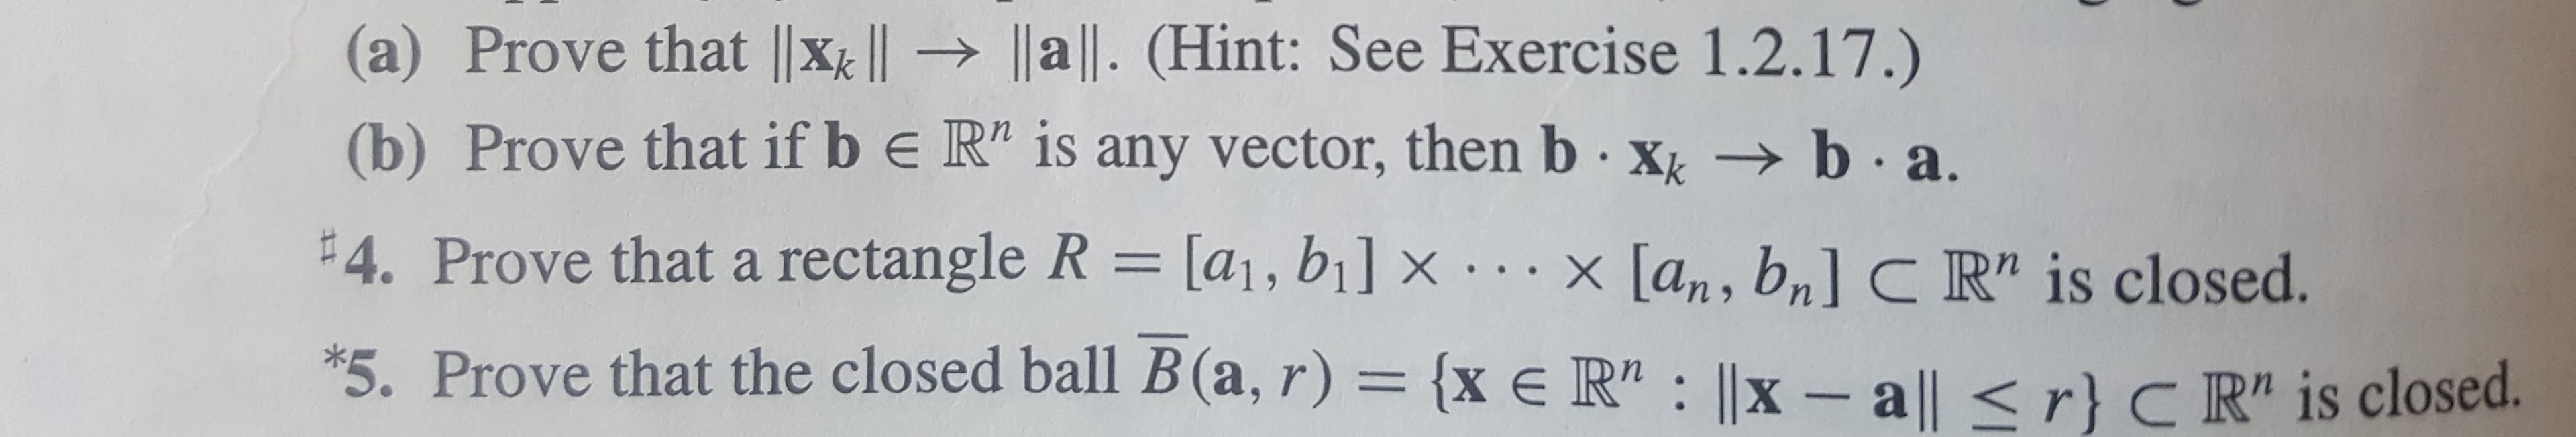 (a) Prove that |x | a ll. (Hint: See Exercise 1.2.17.)
(b) Prove that if b e R" is any vector, then b xk b a
#4. Prove thata rectangle R = [a1, bi] x ...x [an, bn] C R" is closed.
*5. Prove that the closed ball B (a, r) = {x e R" ||x - a|| < r} C R" is closed.
